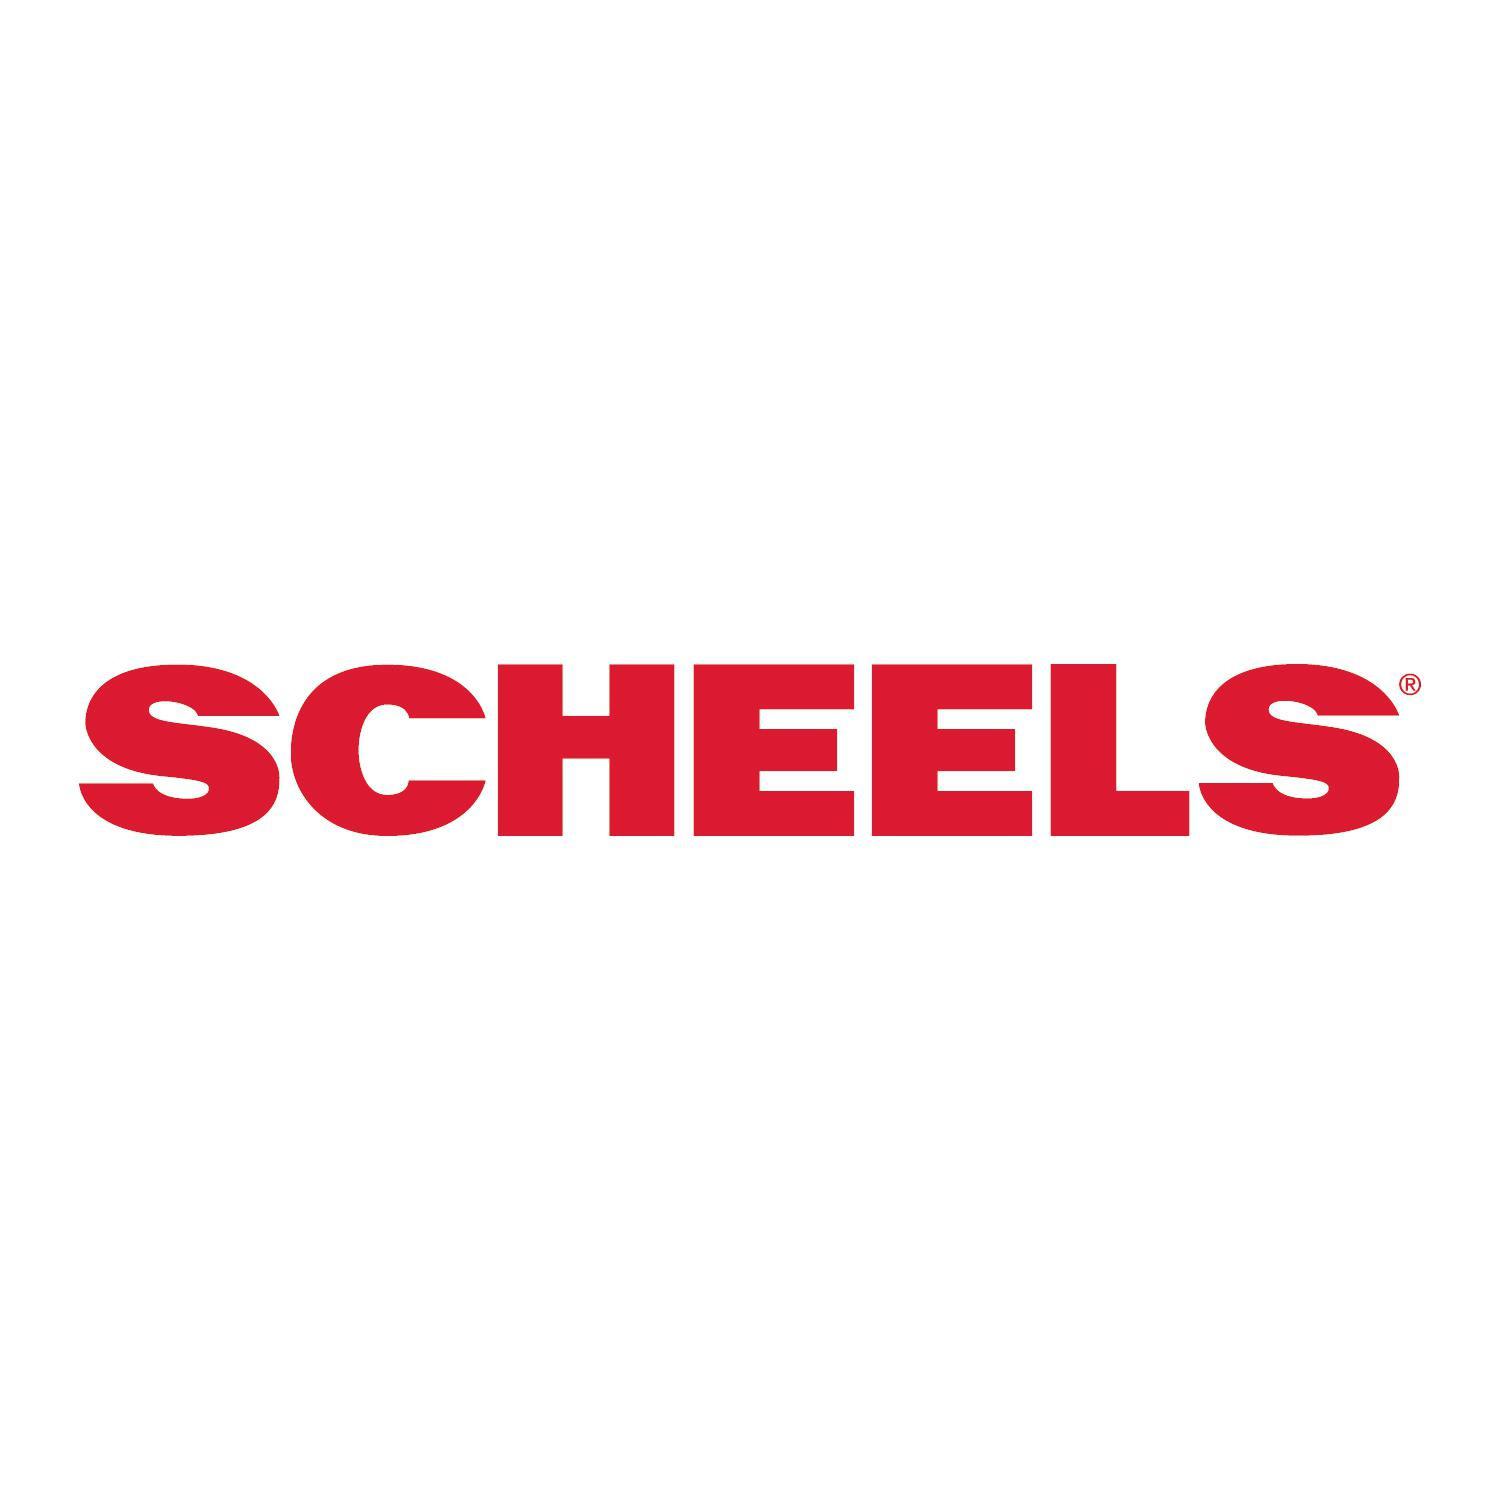 Scheels - Springfield, IL 62711 - (217)726-6330 | ShowMeLocal.com